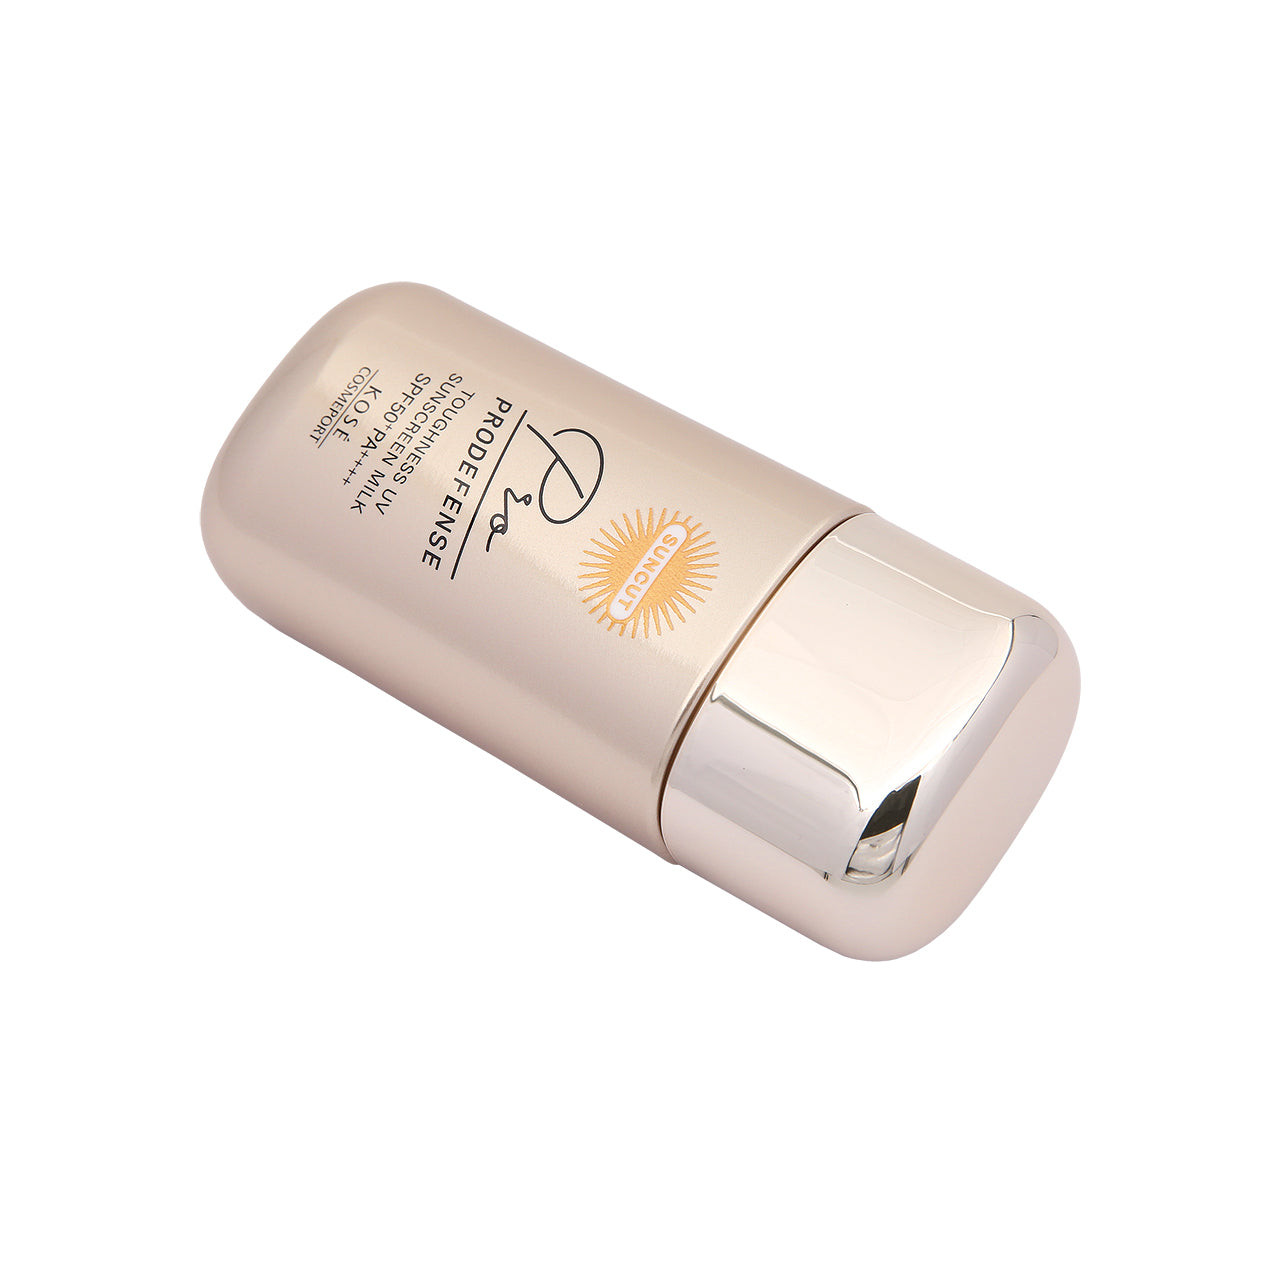 Kose Cosmeport Suncut Prodefense Toughness UV Sunscreen Milk SPF50+ PA++++ 60ml | Sasa Global eShop